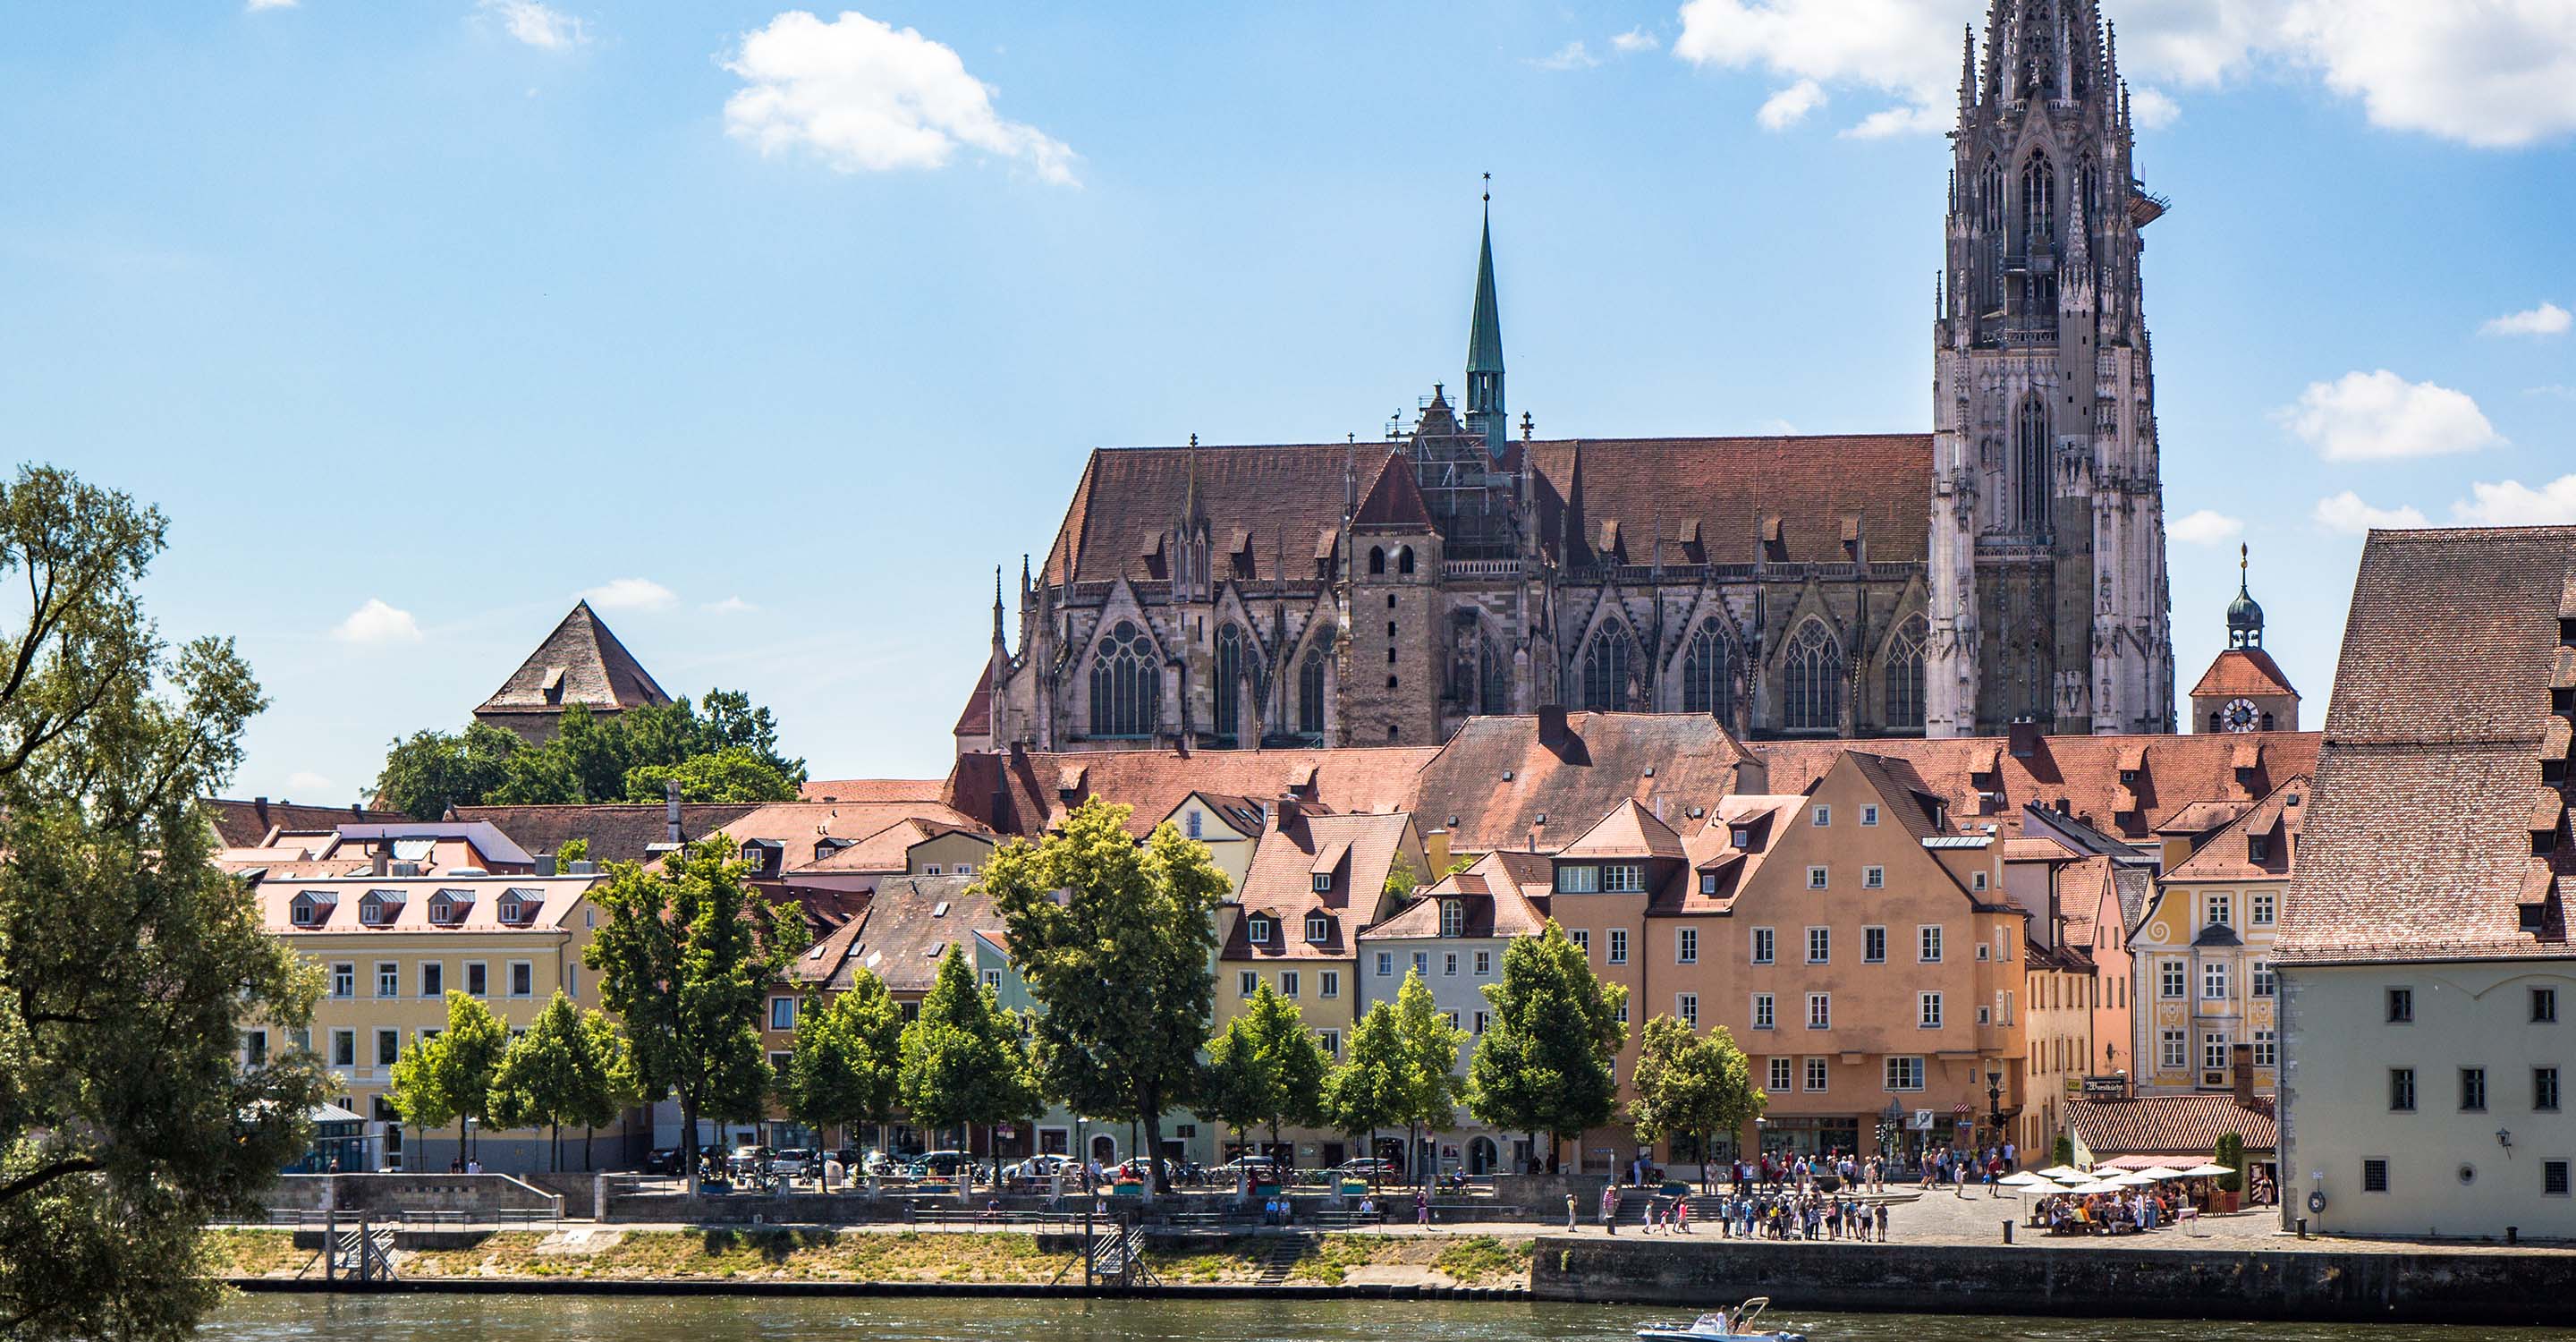 The Old Town Of Regensburg German World Heritage